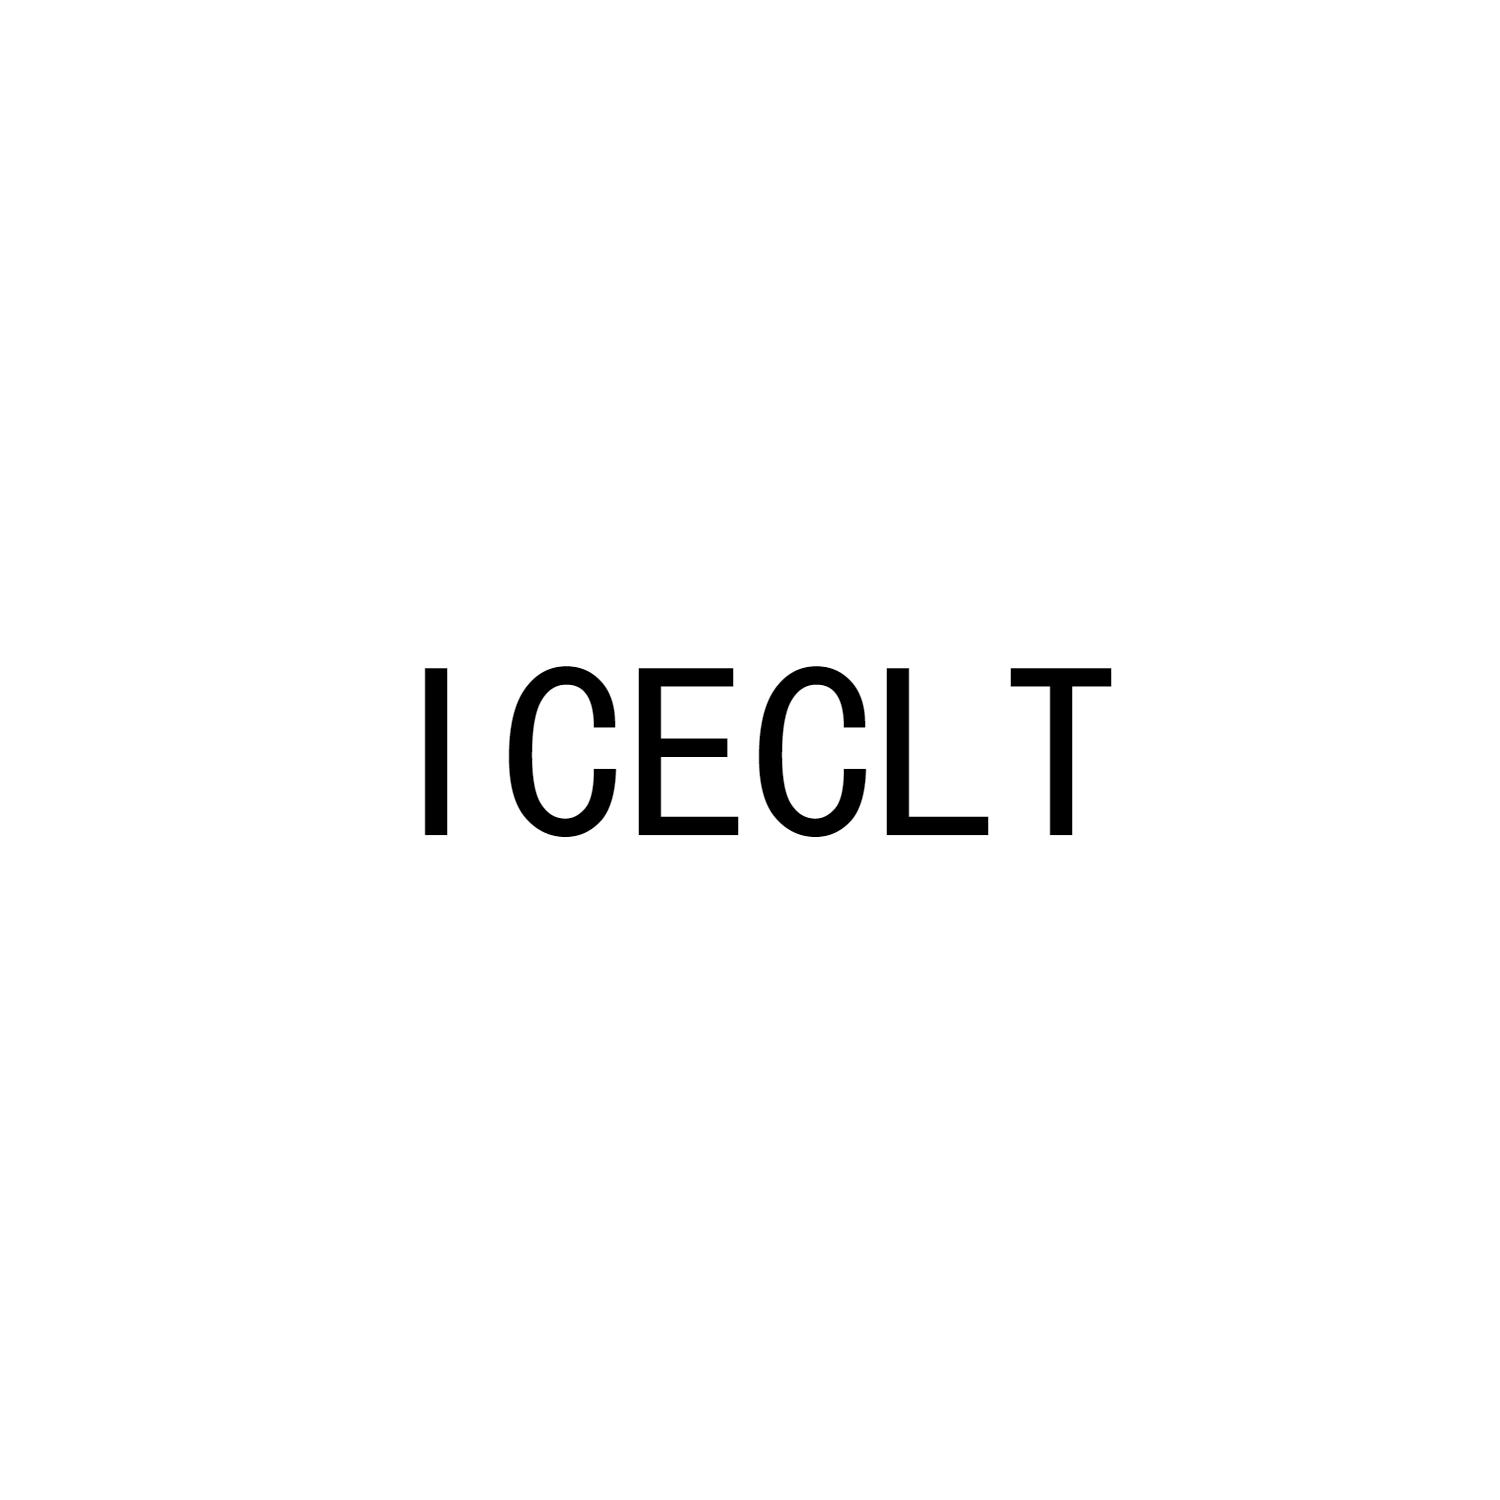 ICECLT